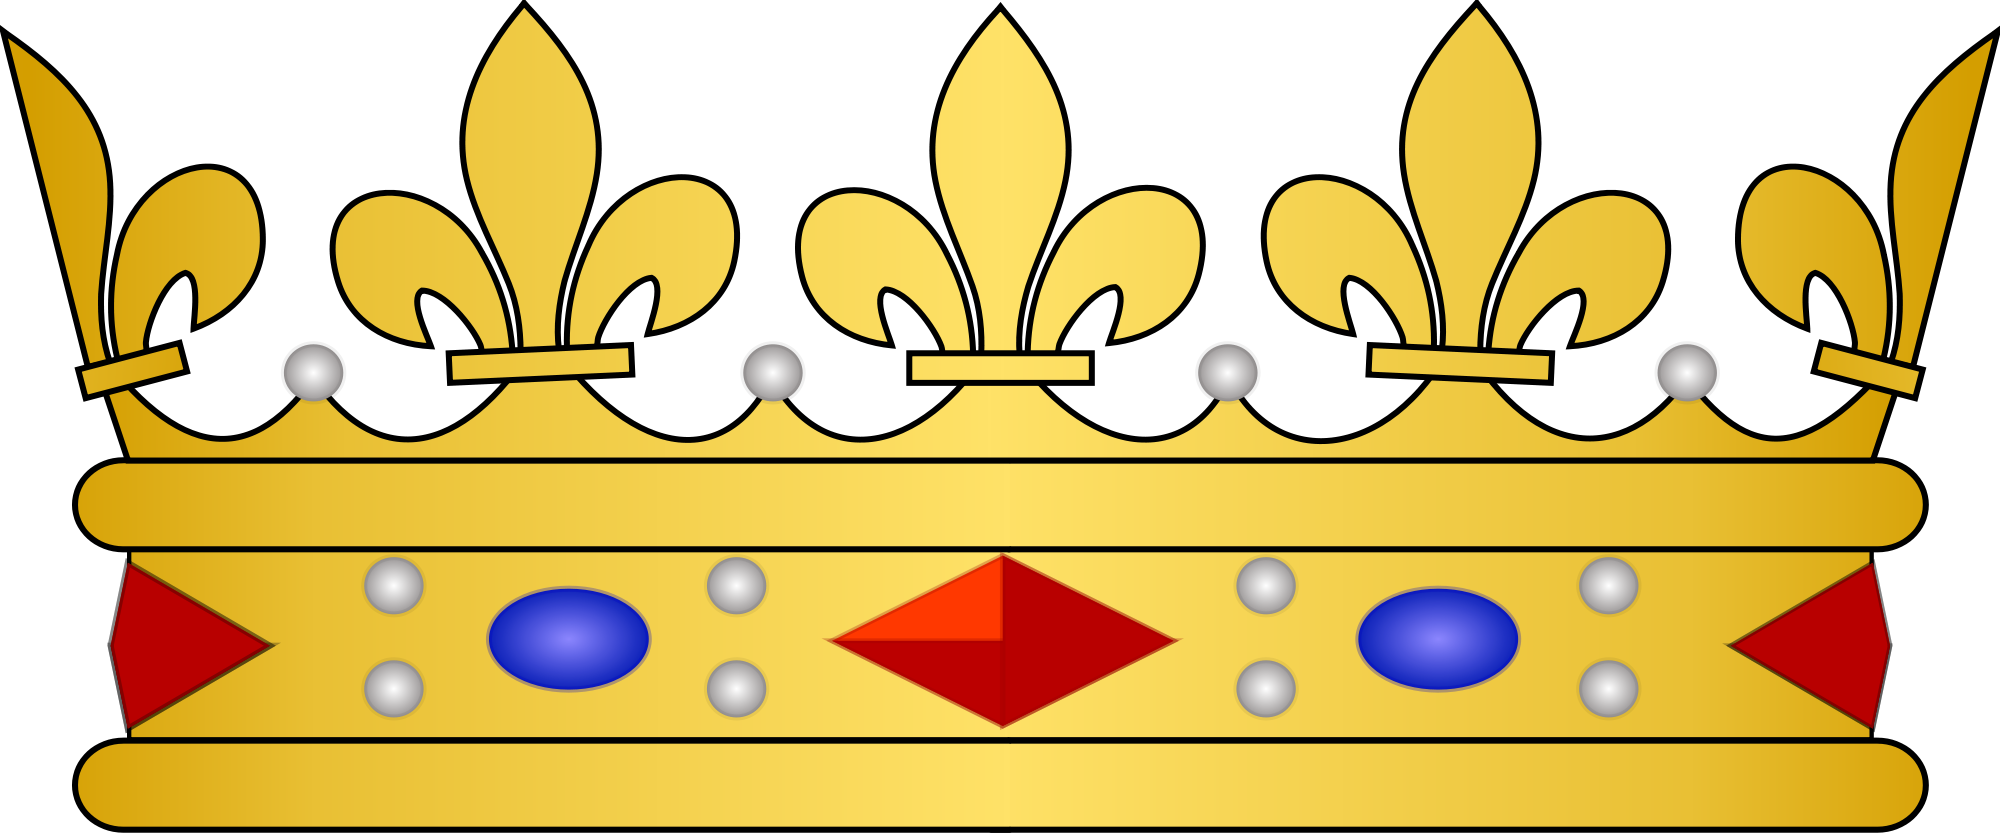 Golden Prince Crown PNG Gambar Gratis